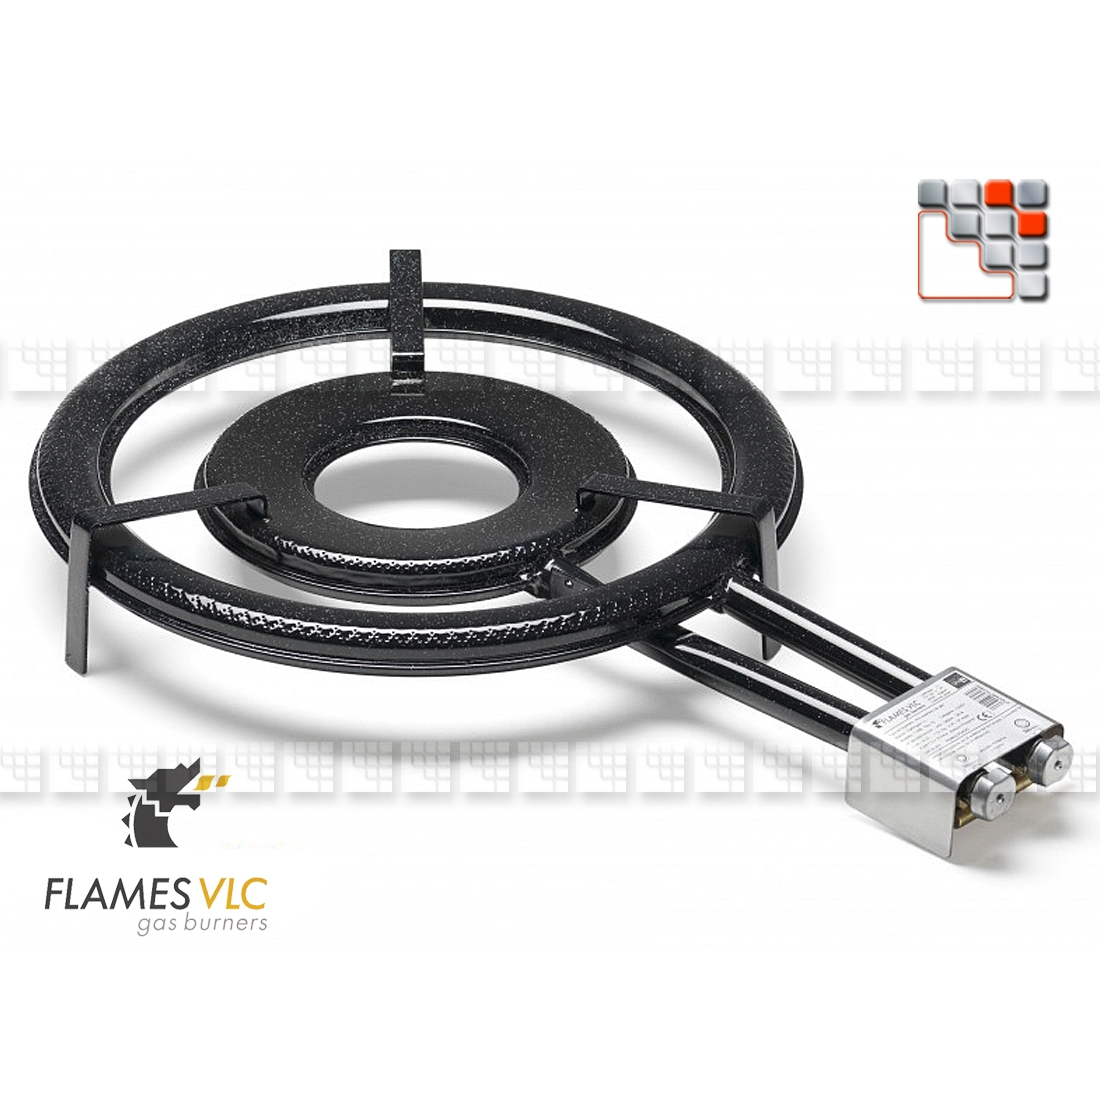 Gas Burner TT-460PFR VLC F08-TT460 FL AMES VLC® Gas Burner Flames VLC